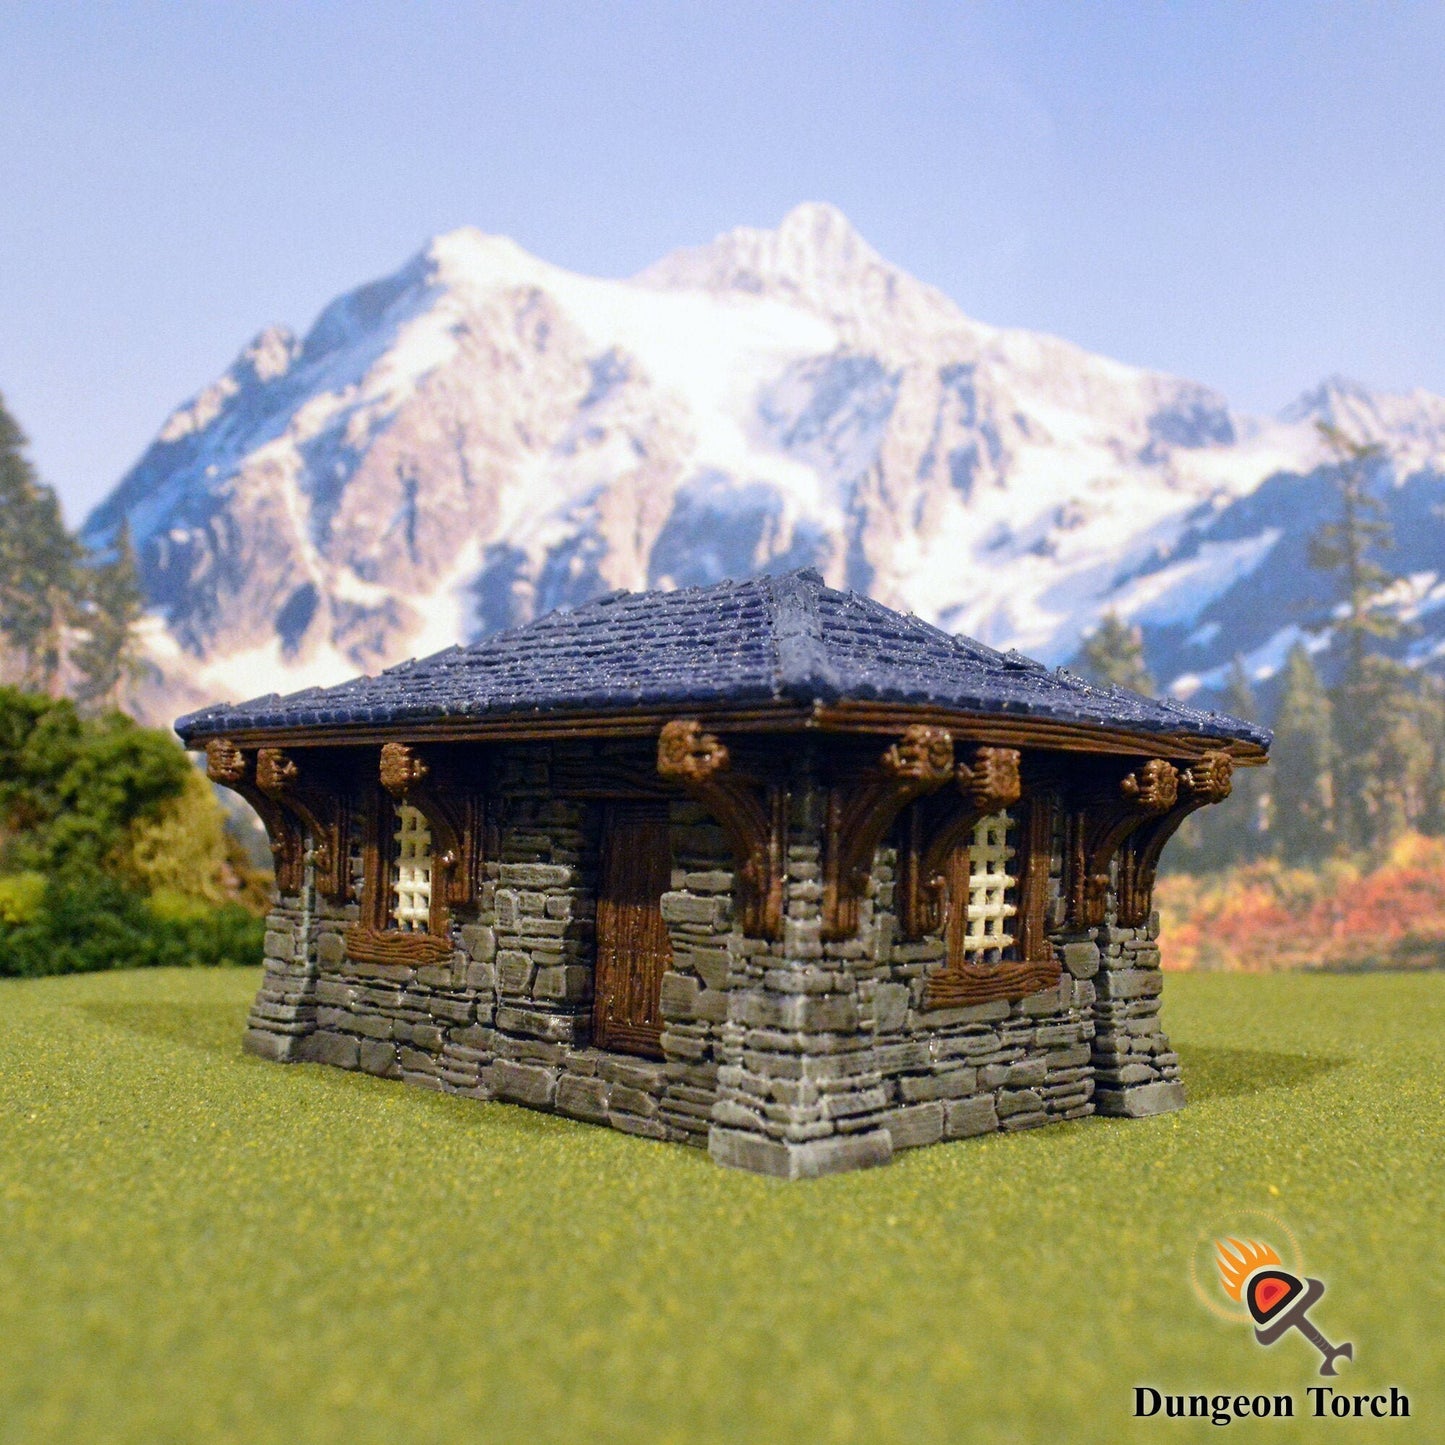 Cottage Kit 28mm for D&D Terrain, DnD Pathfinder Stone House - Modular OpenLOCK Building Tiles